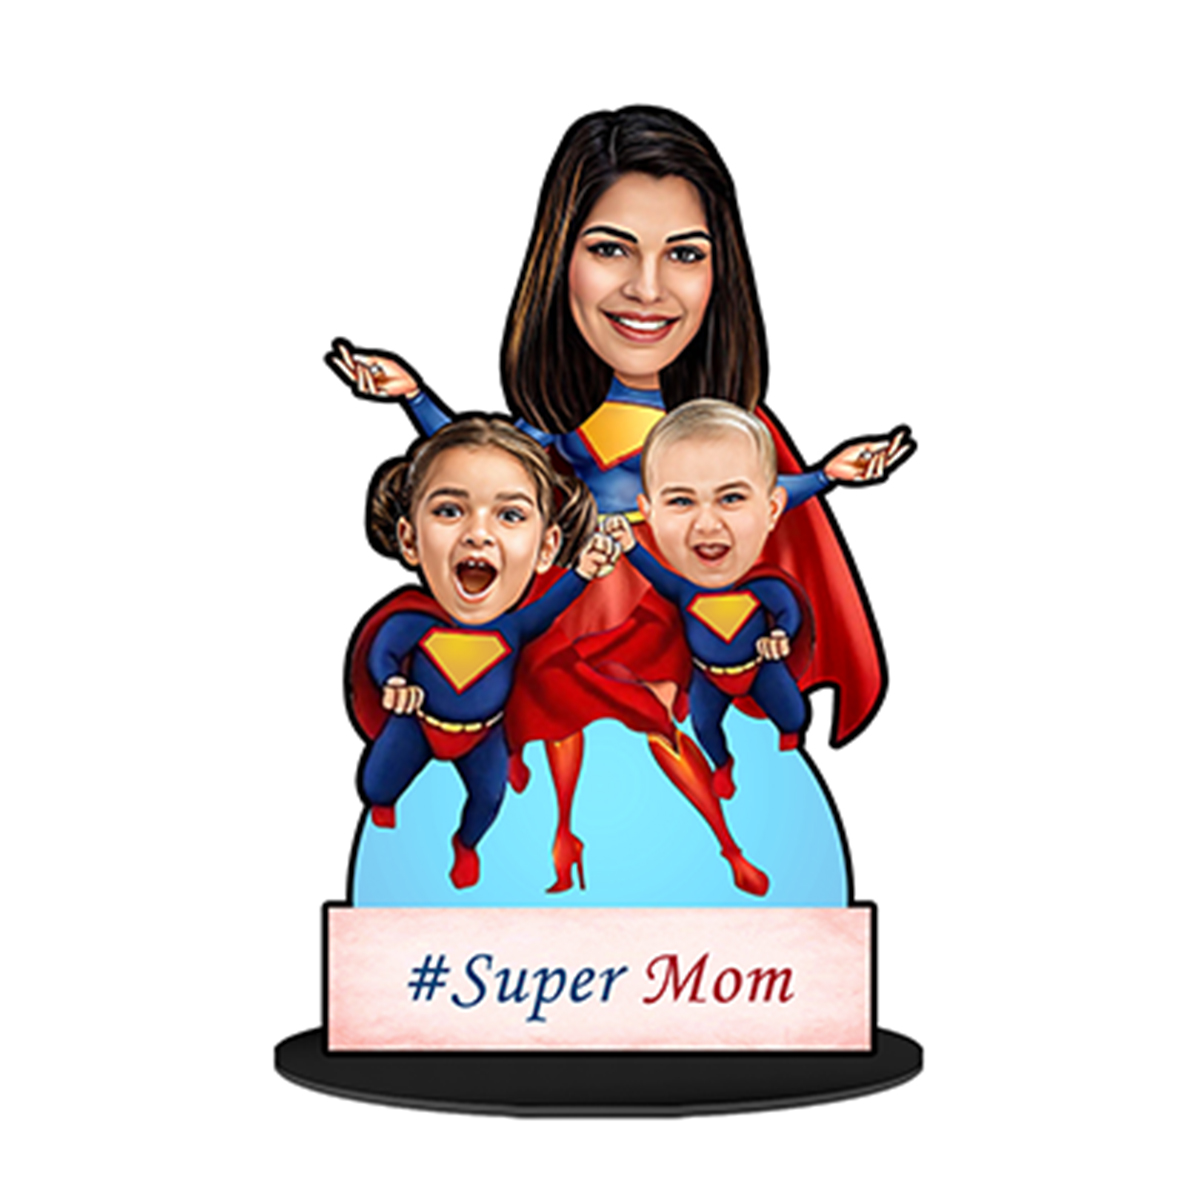 Super Mom with Kids